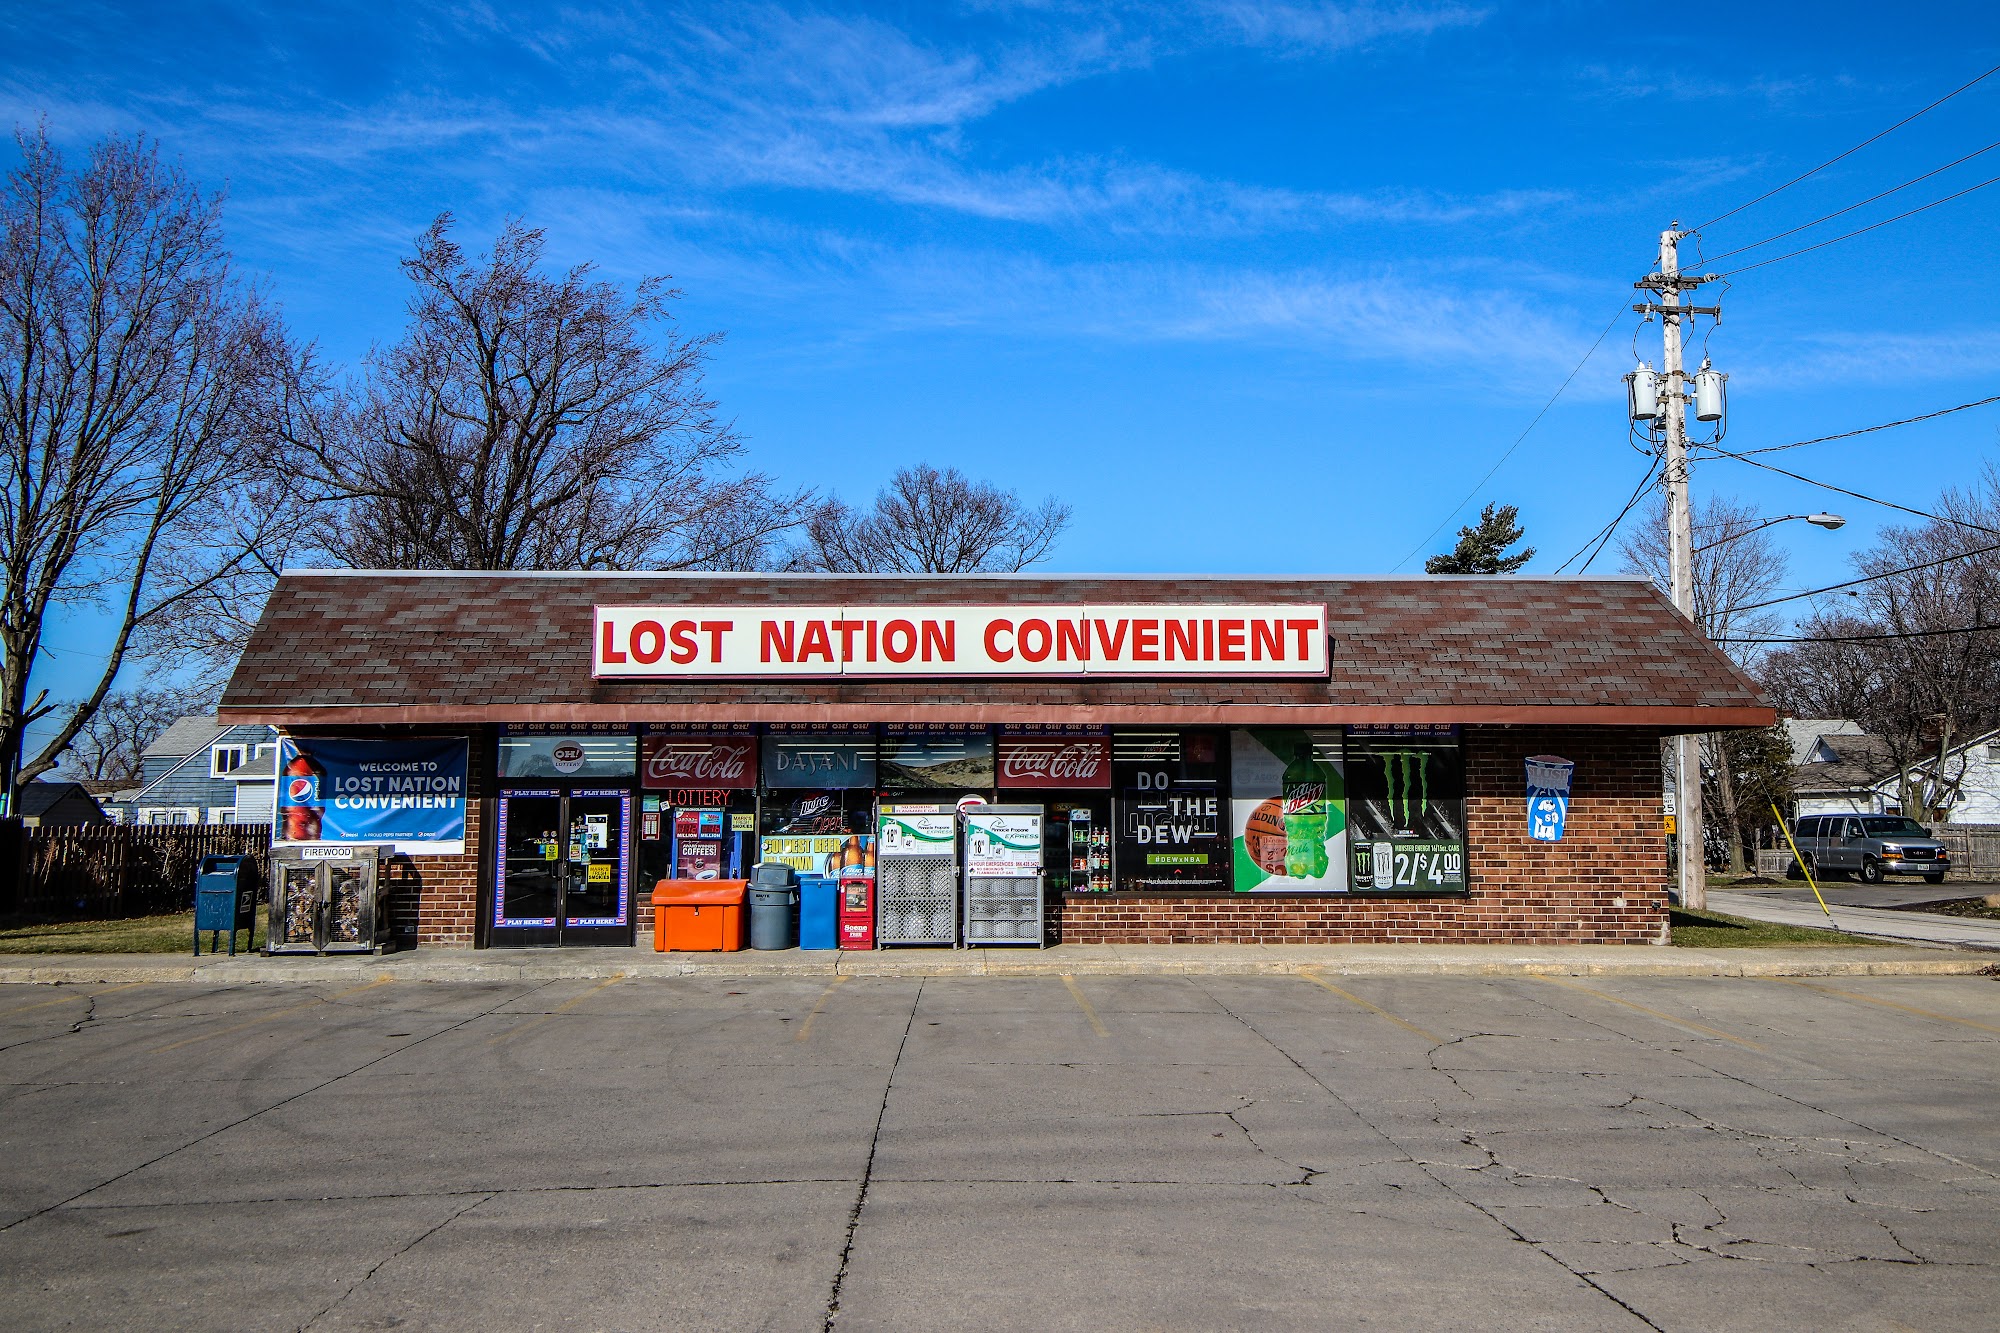 Lost Nation Convenient